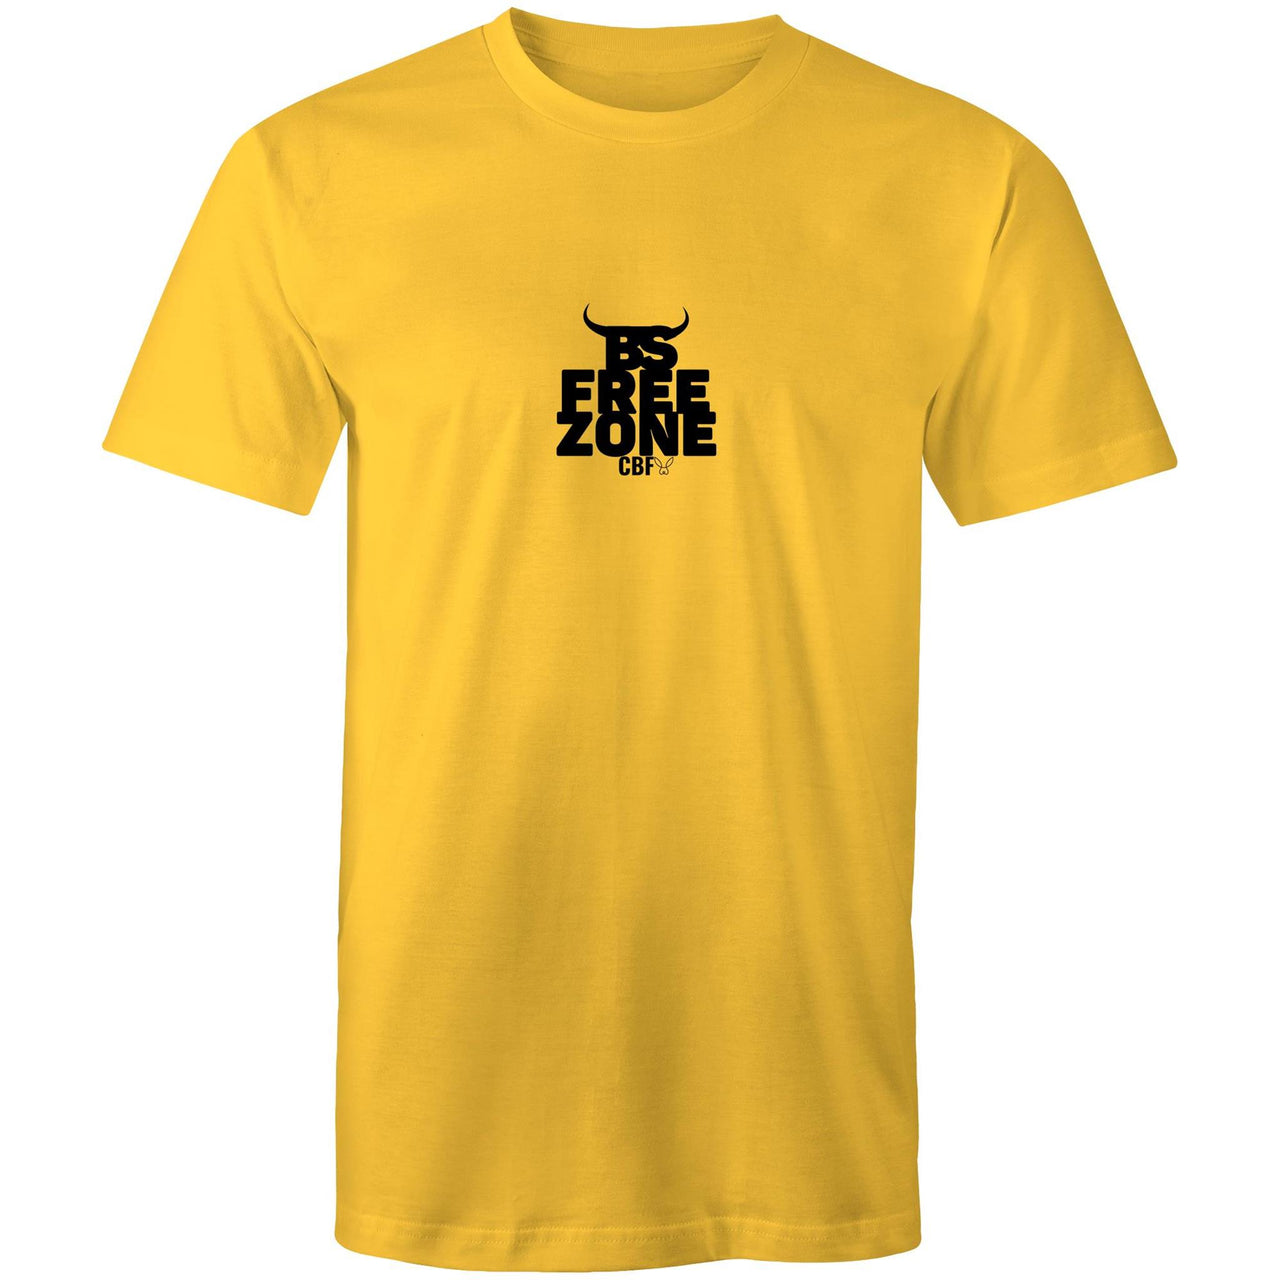 BS Free Zone Crew T-Shirt